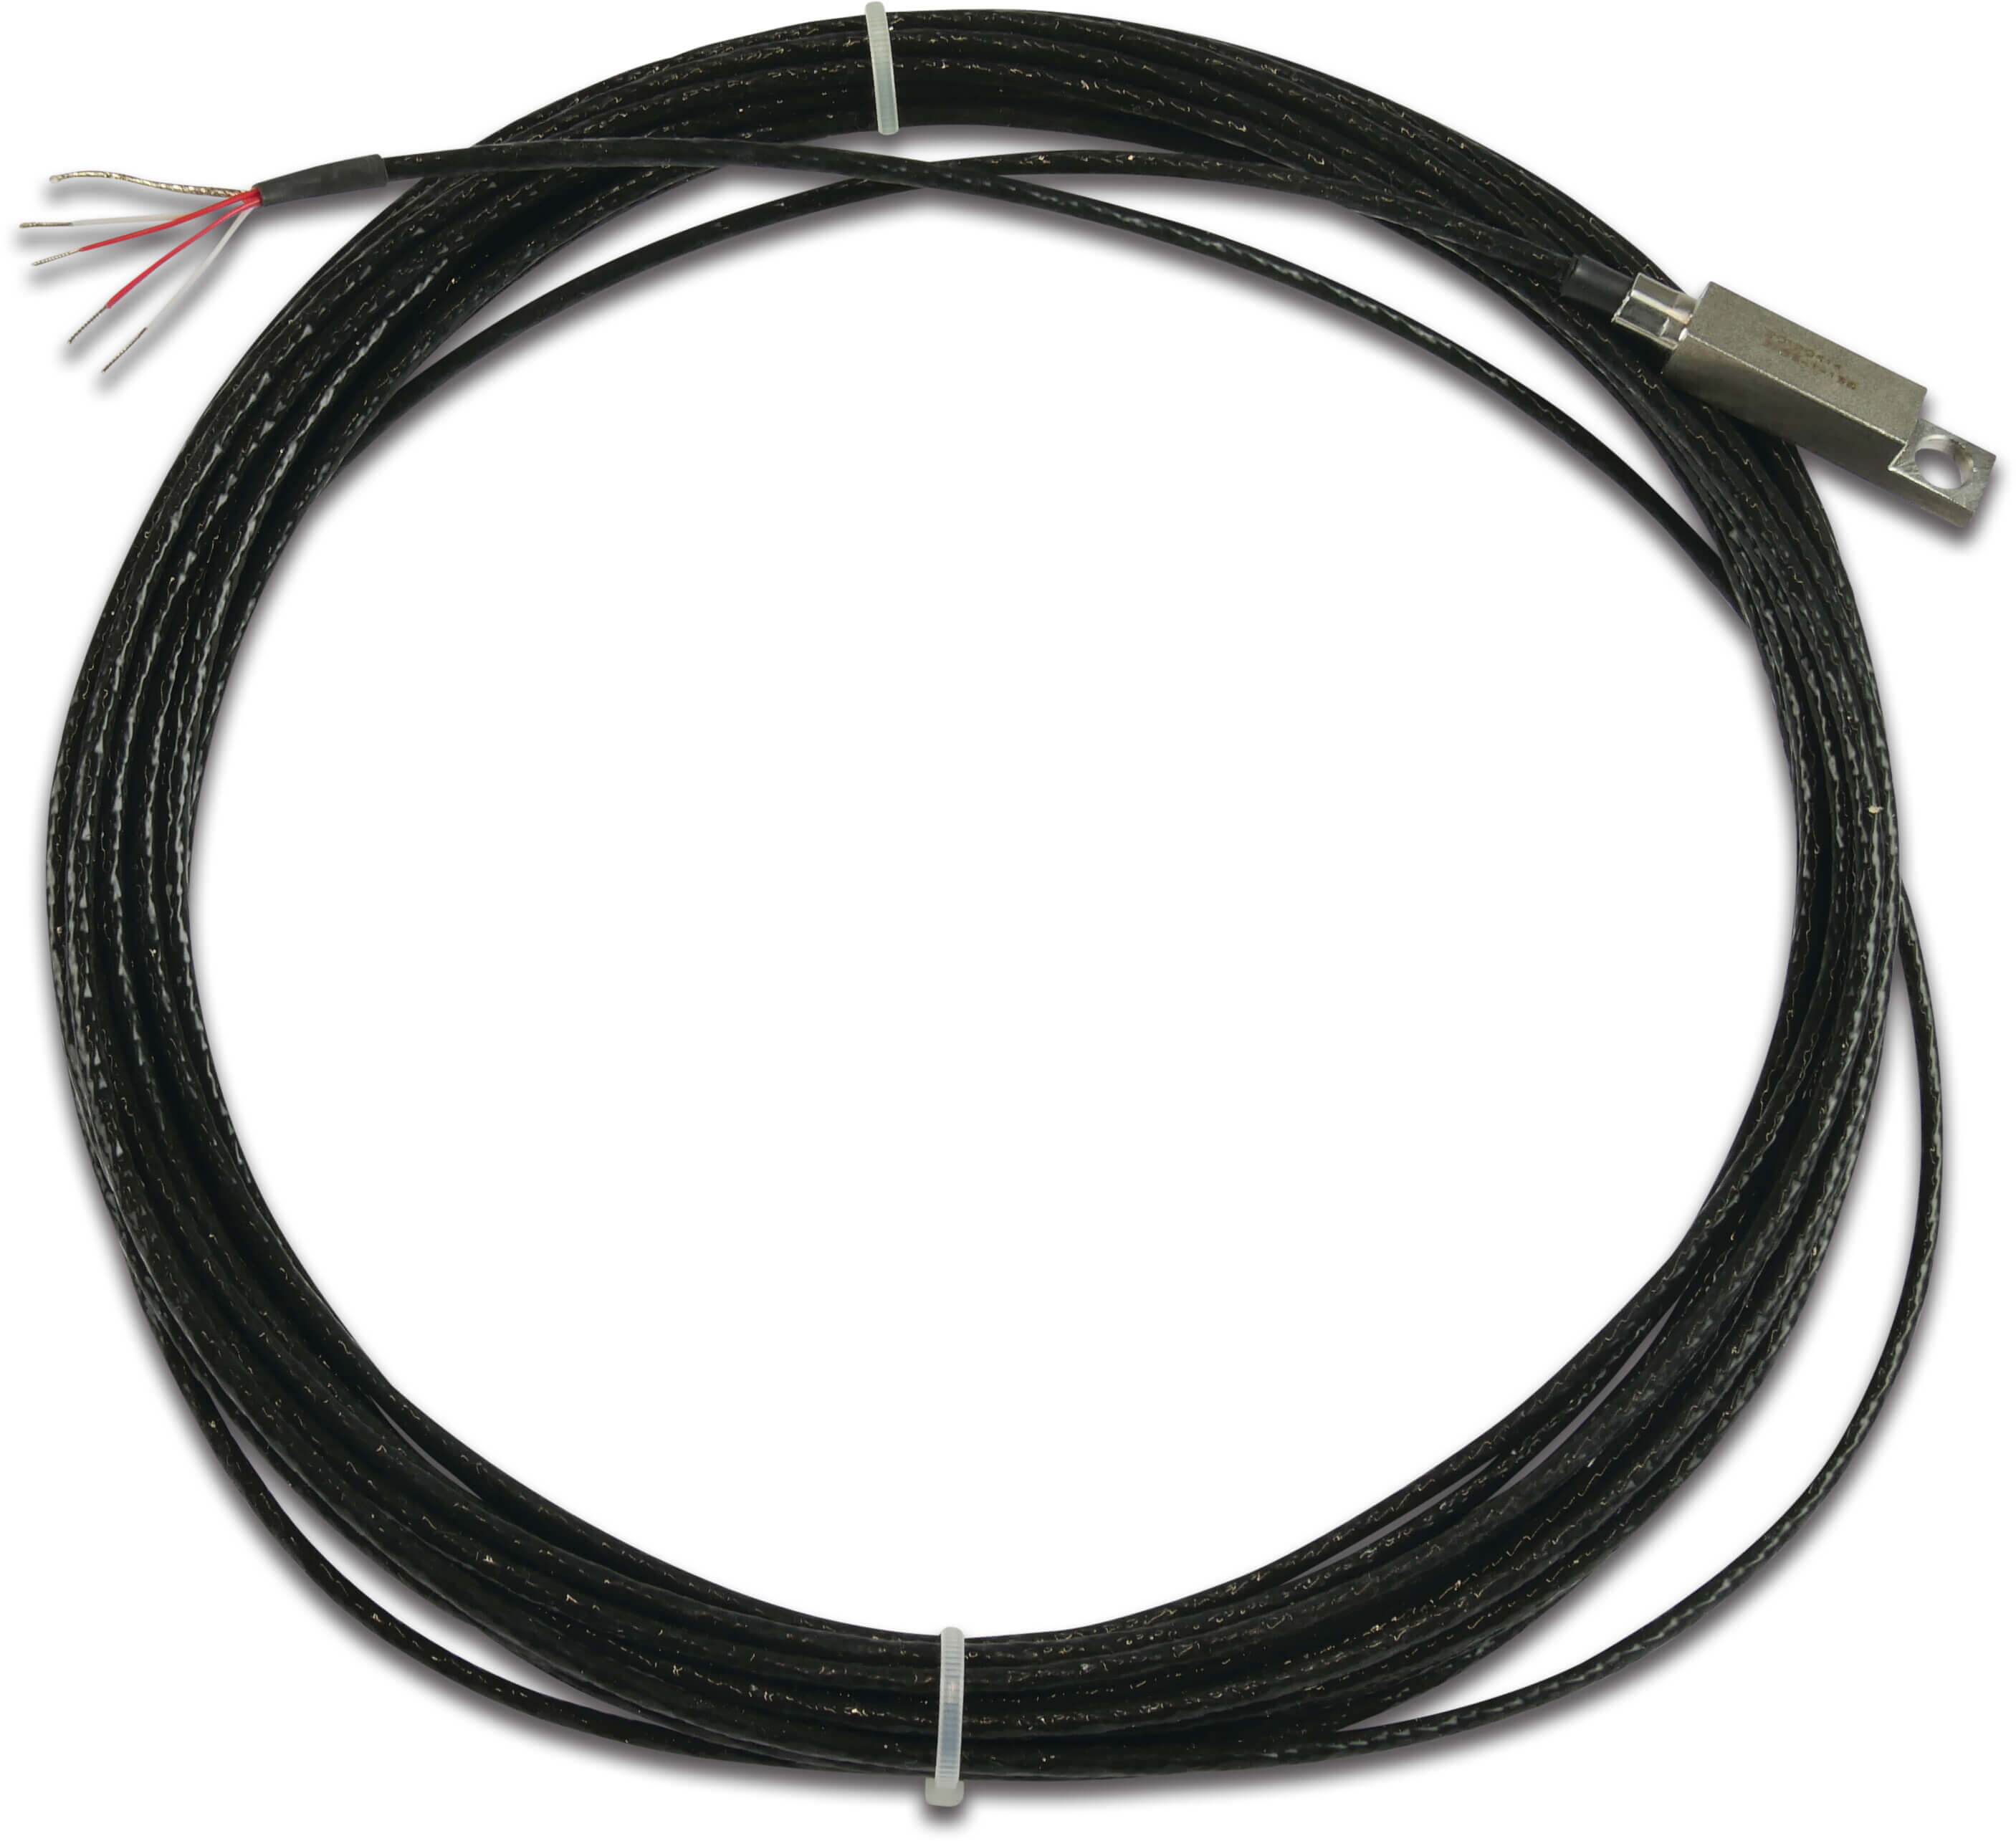 VGE Pro Temperature sensor 10 meter cable